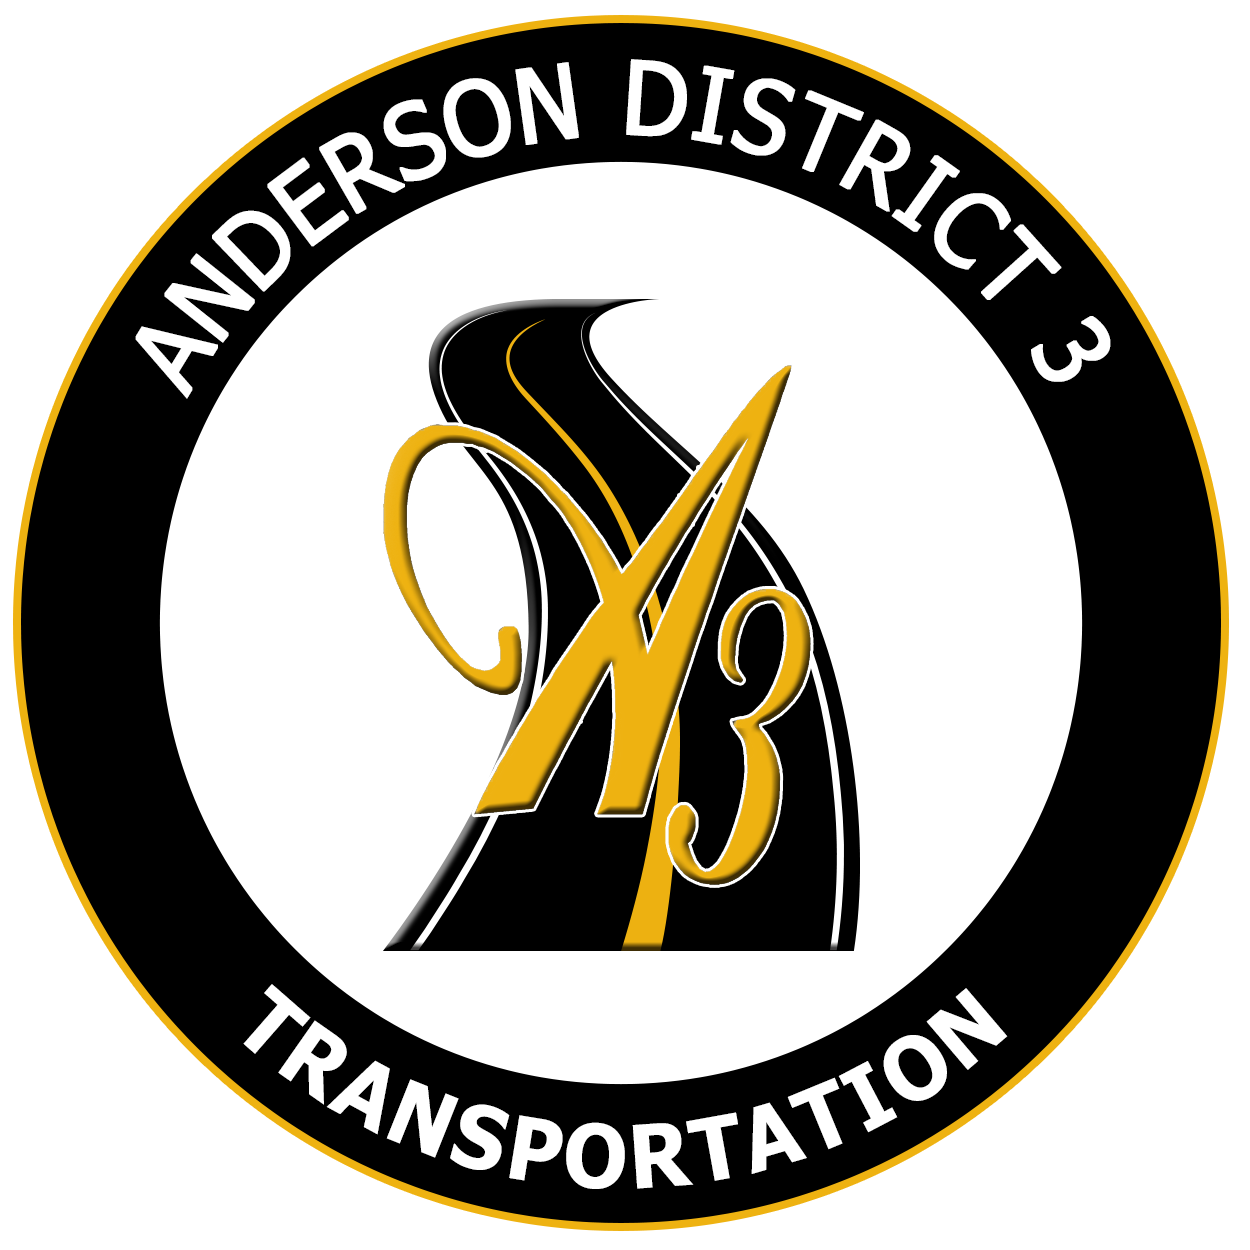 transportation-anderson-school-district-3